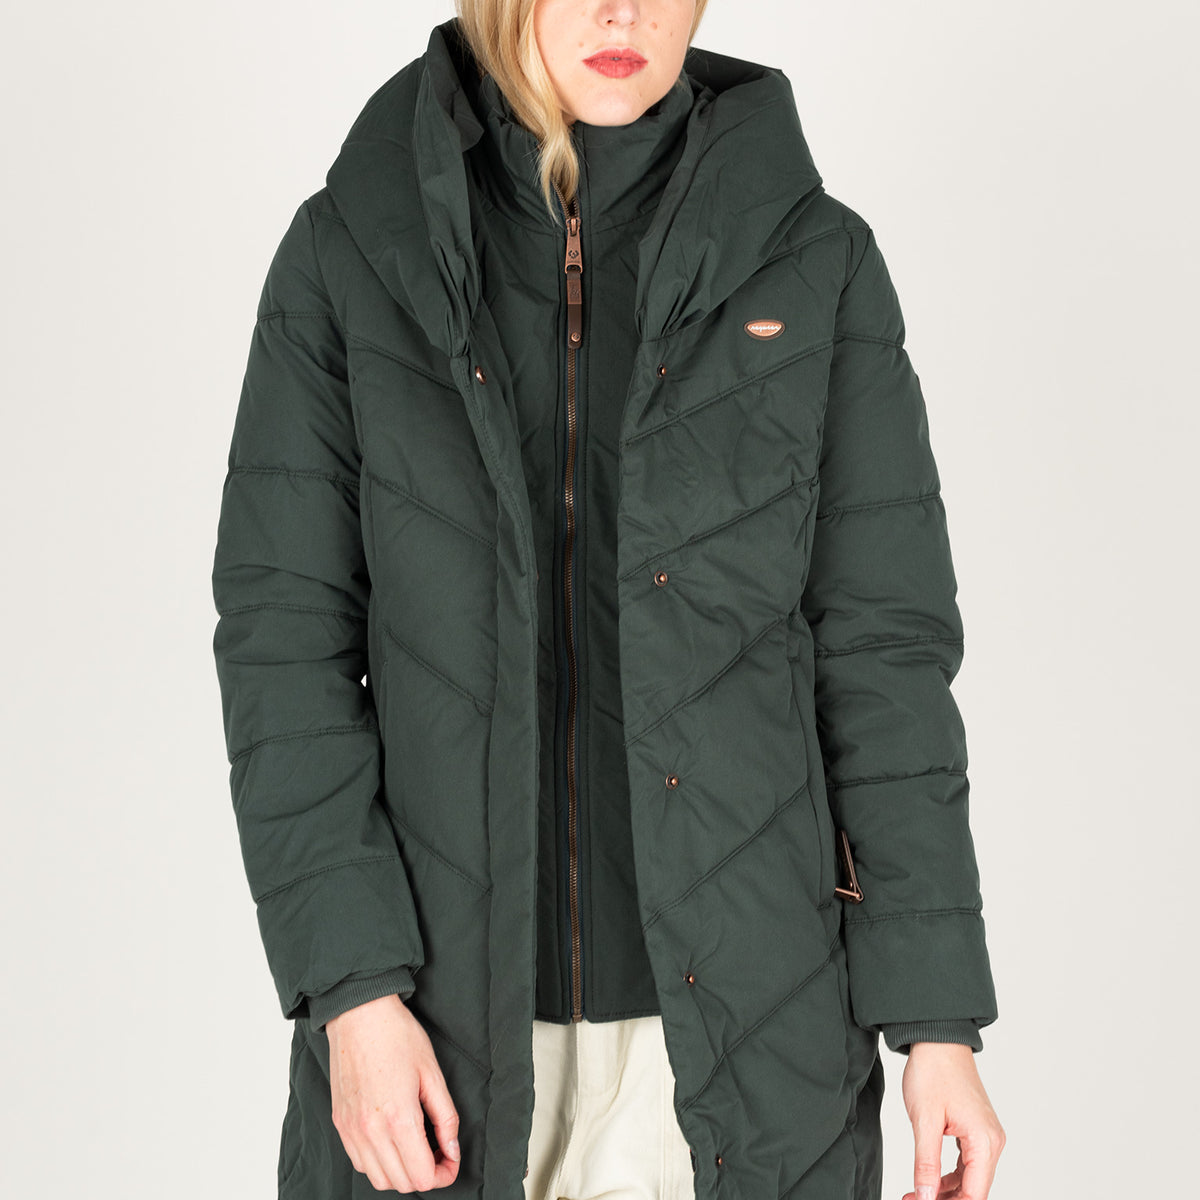 Natalka Ragwear Winter Jackets in Women TITUS – for 323 darkgreen